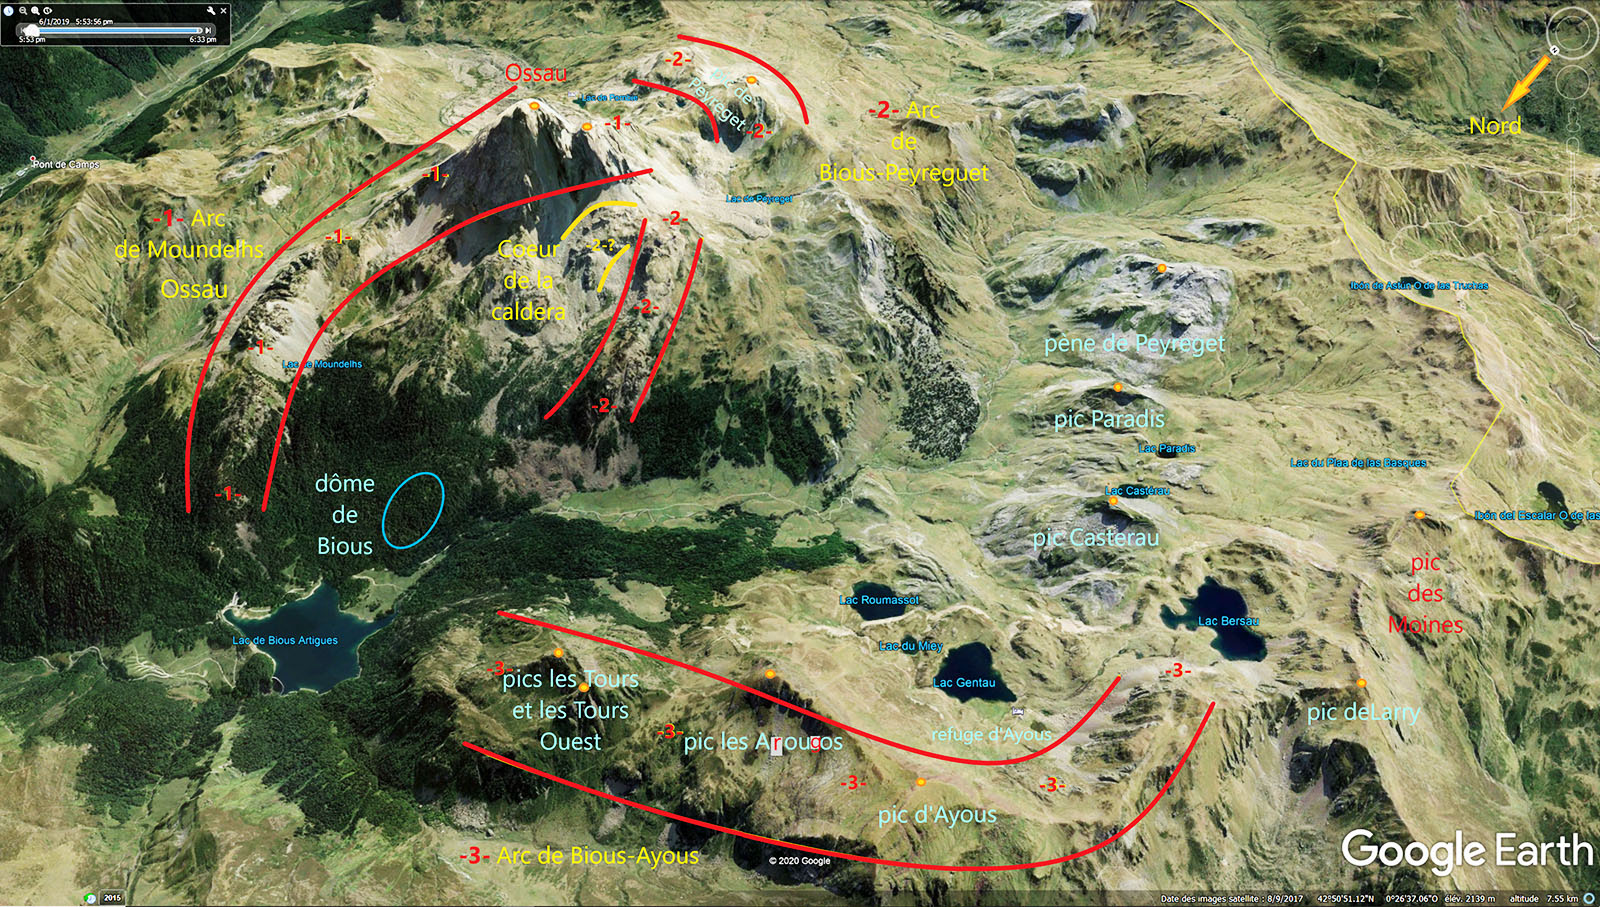 schéma de la déformation de la caldera de l'Ossau